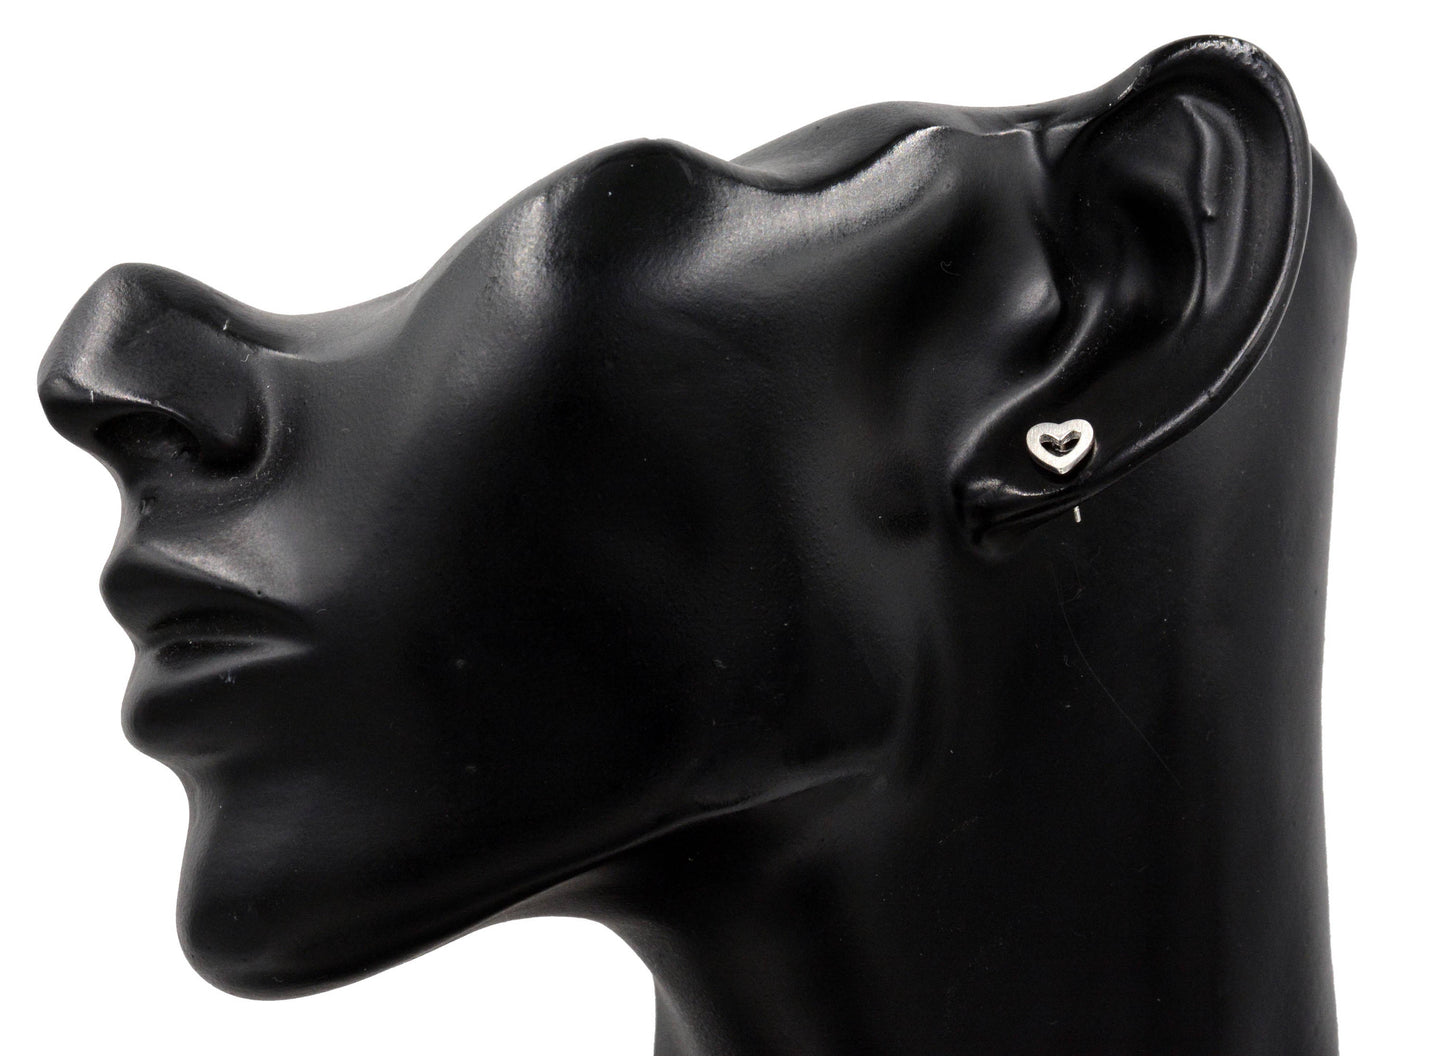 Sterling Silver Cute Little Open Heart Stud Earrings , Textured Finish, Simple Minimalist Design  H50